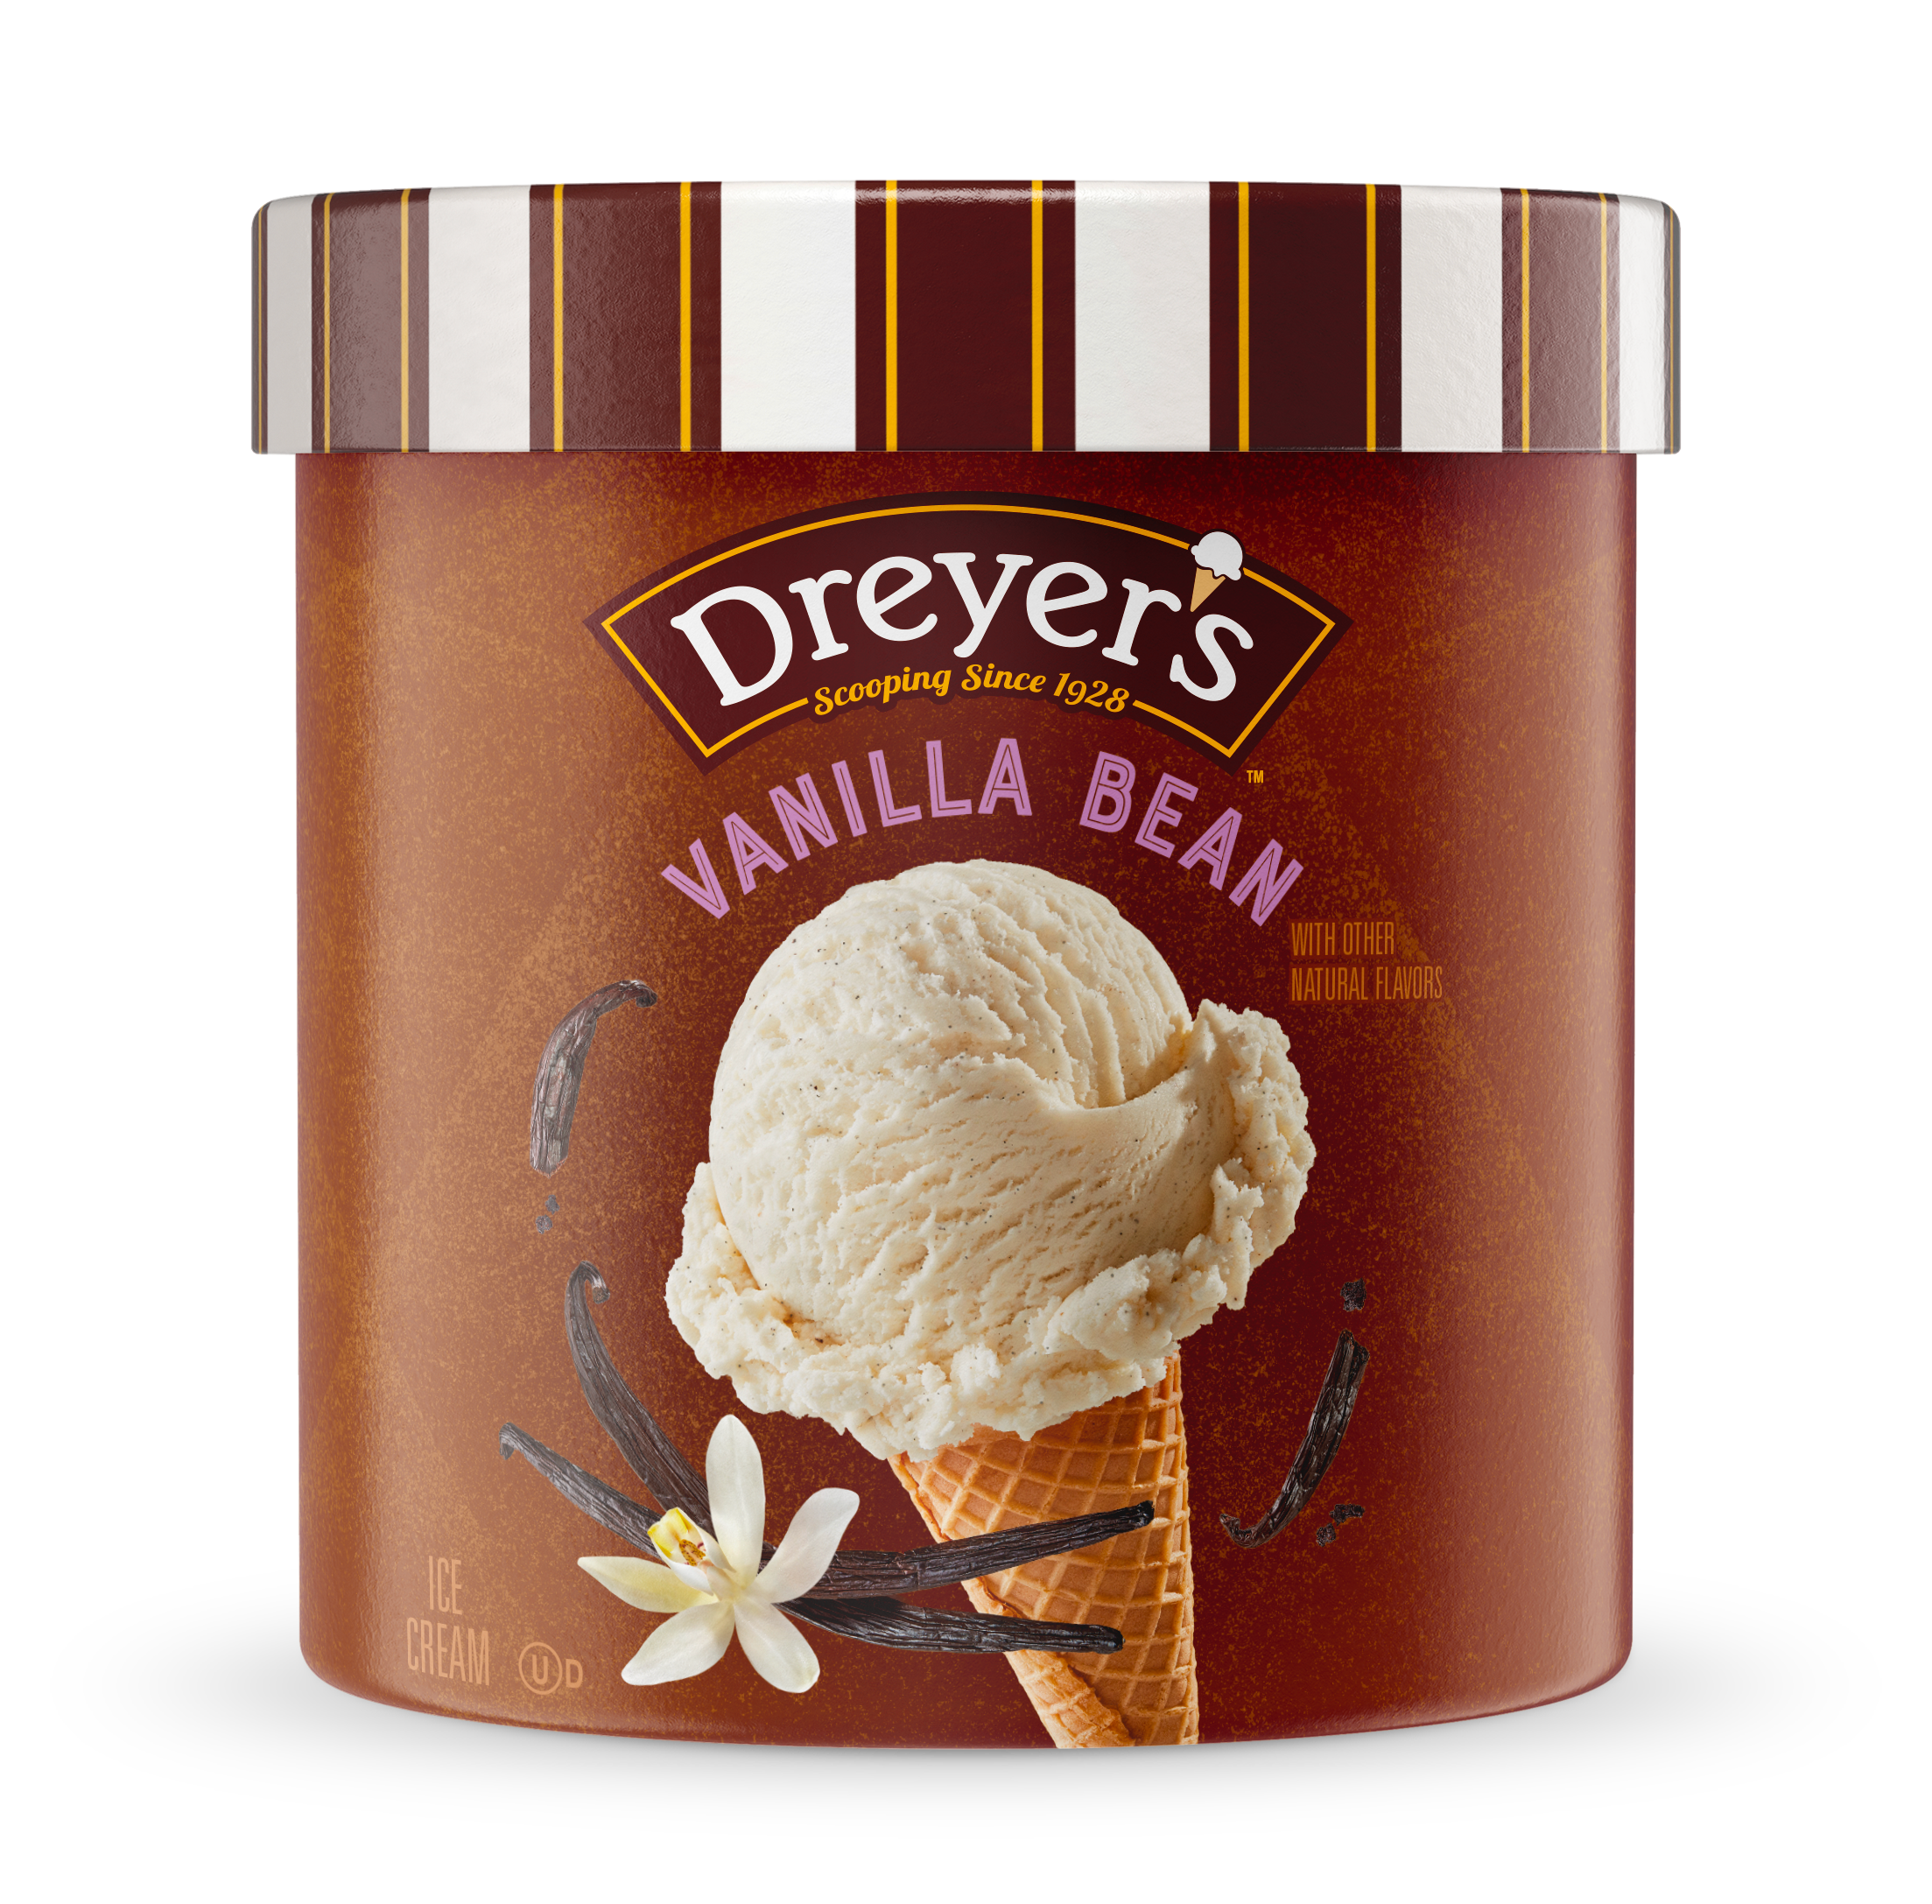 Carton of Dreyer's vanilla bean ice cream